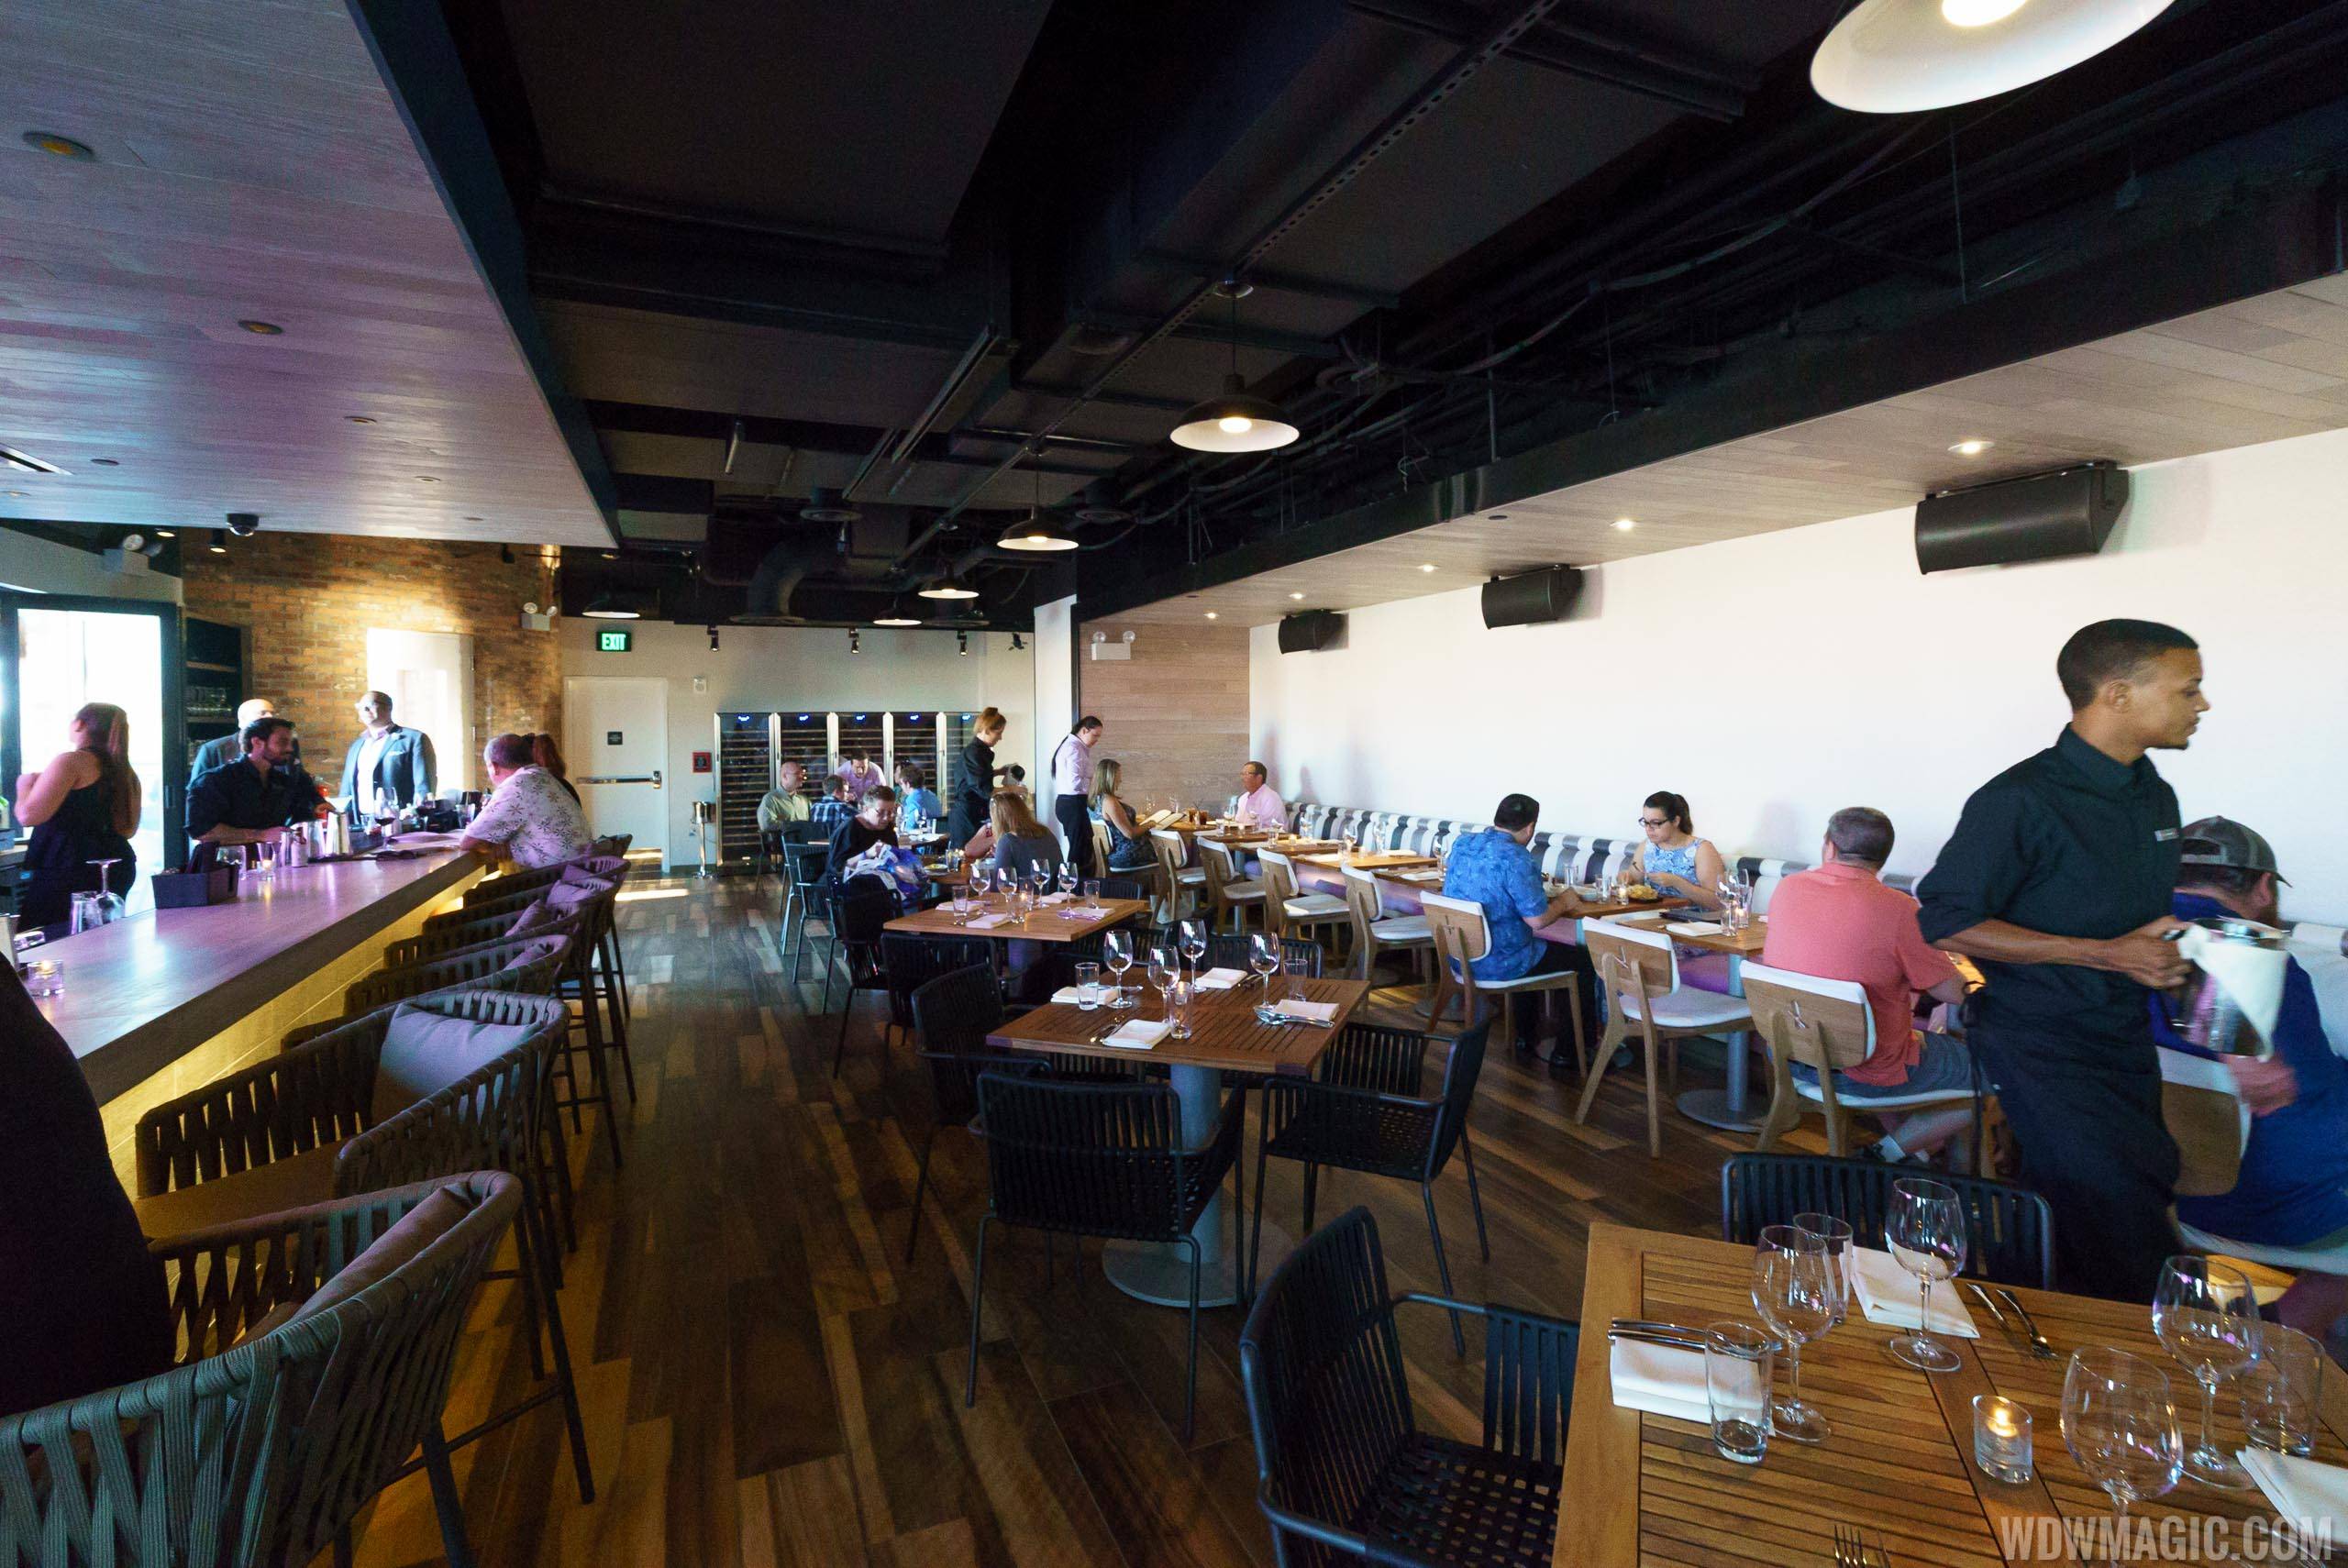 STK Orlando - Upper level dining room and bar